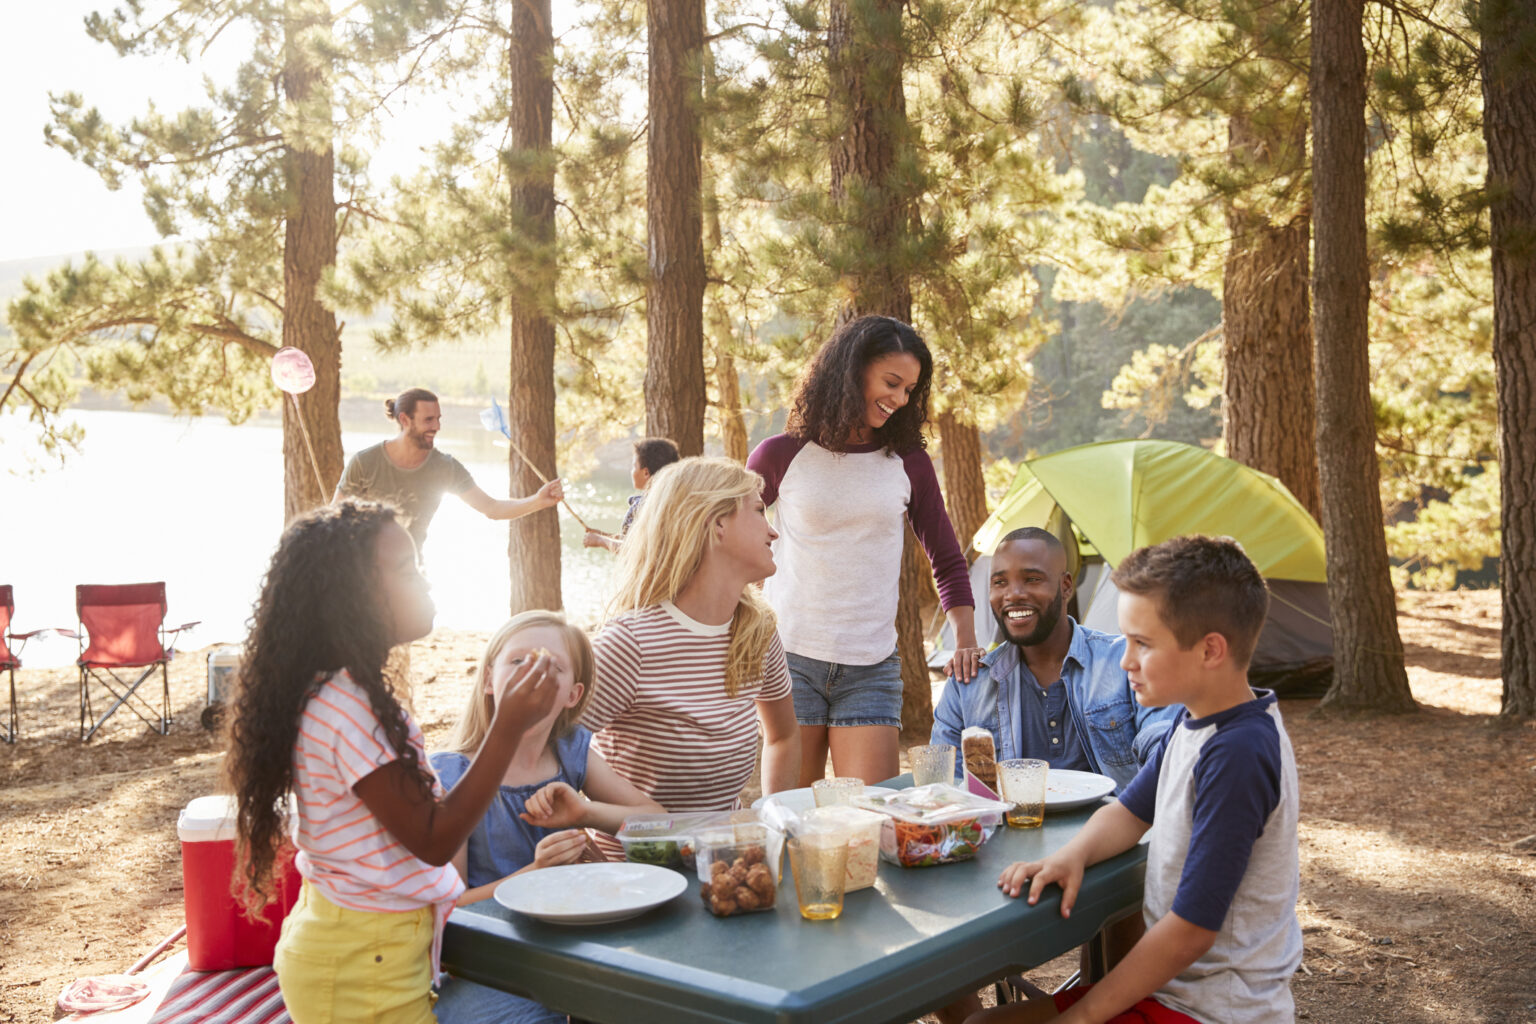 Group enjoying a picnic